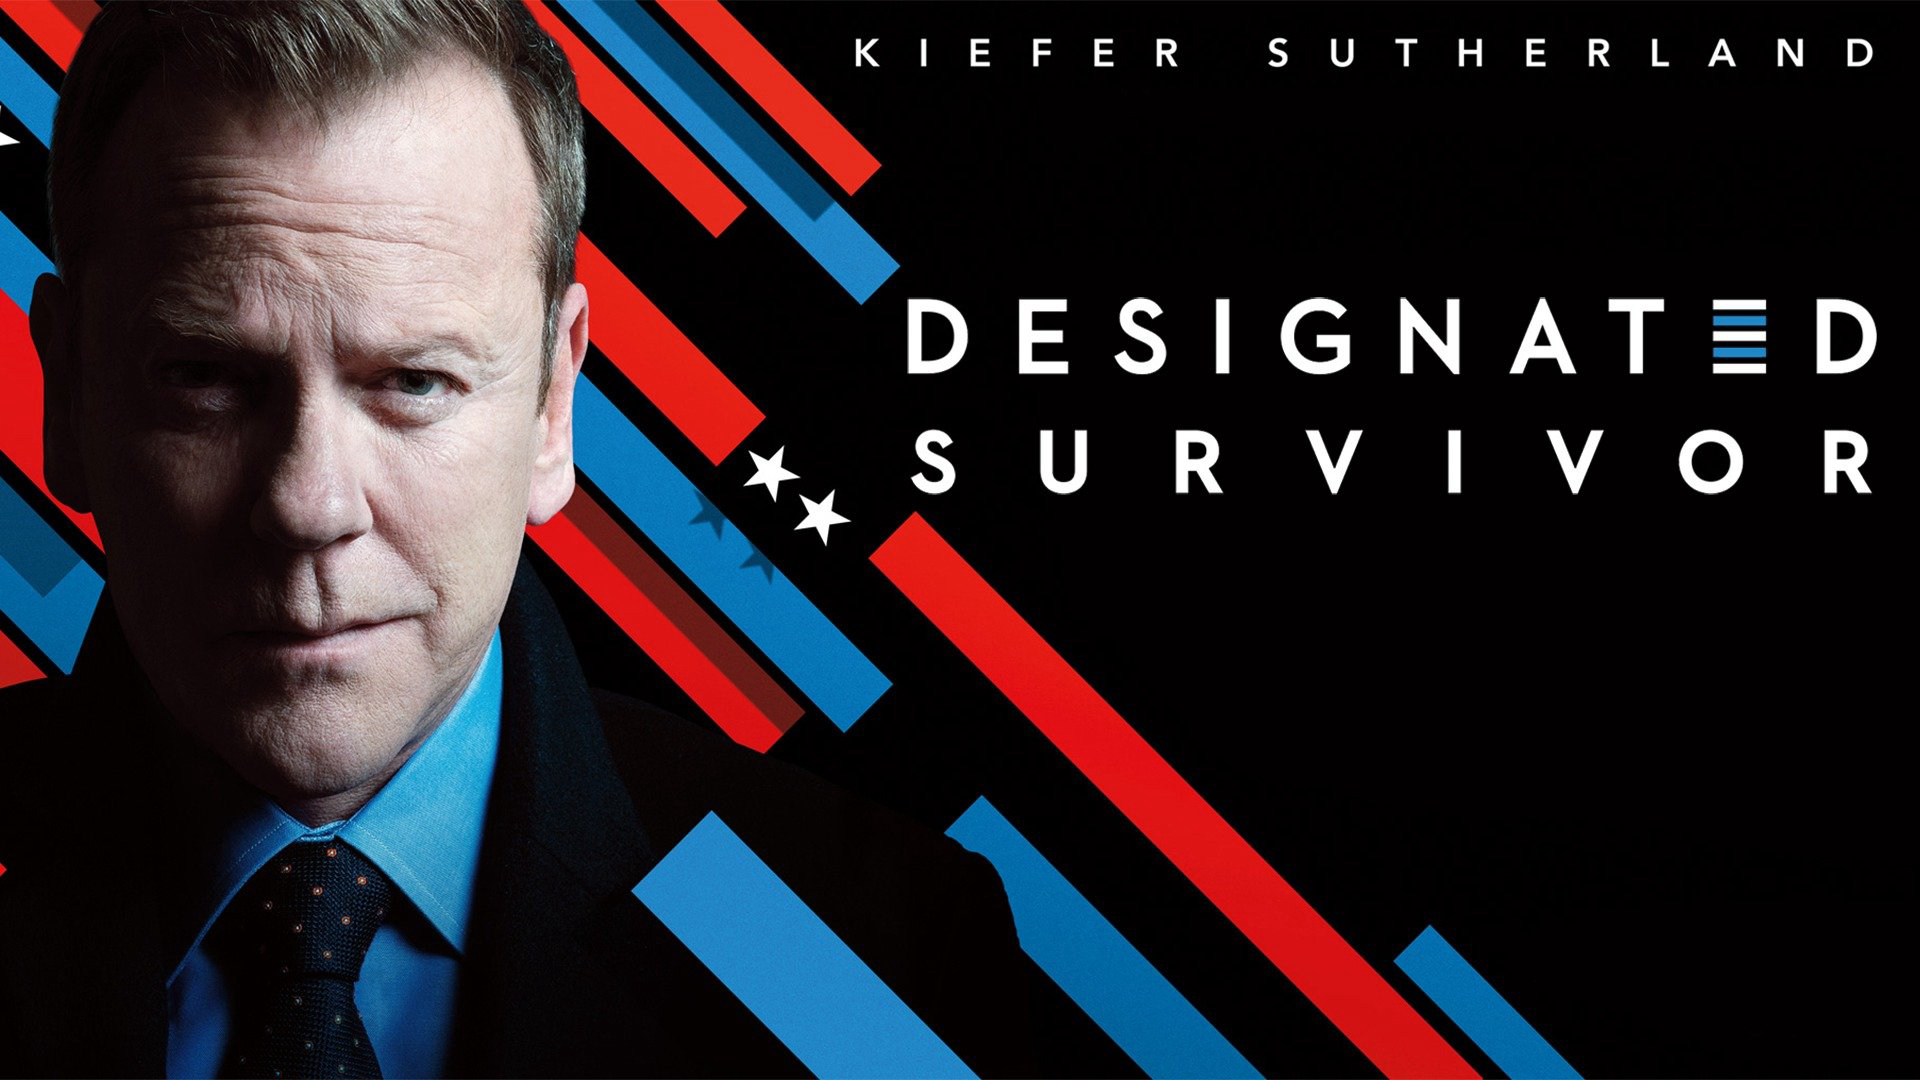 Tổng Thống Bất Đắc Dĩ (Phần 3) - Designated Survivor (Season 3) (2019)